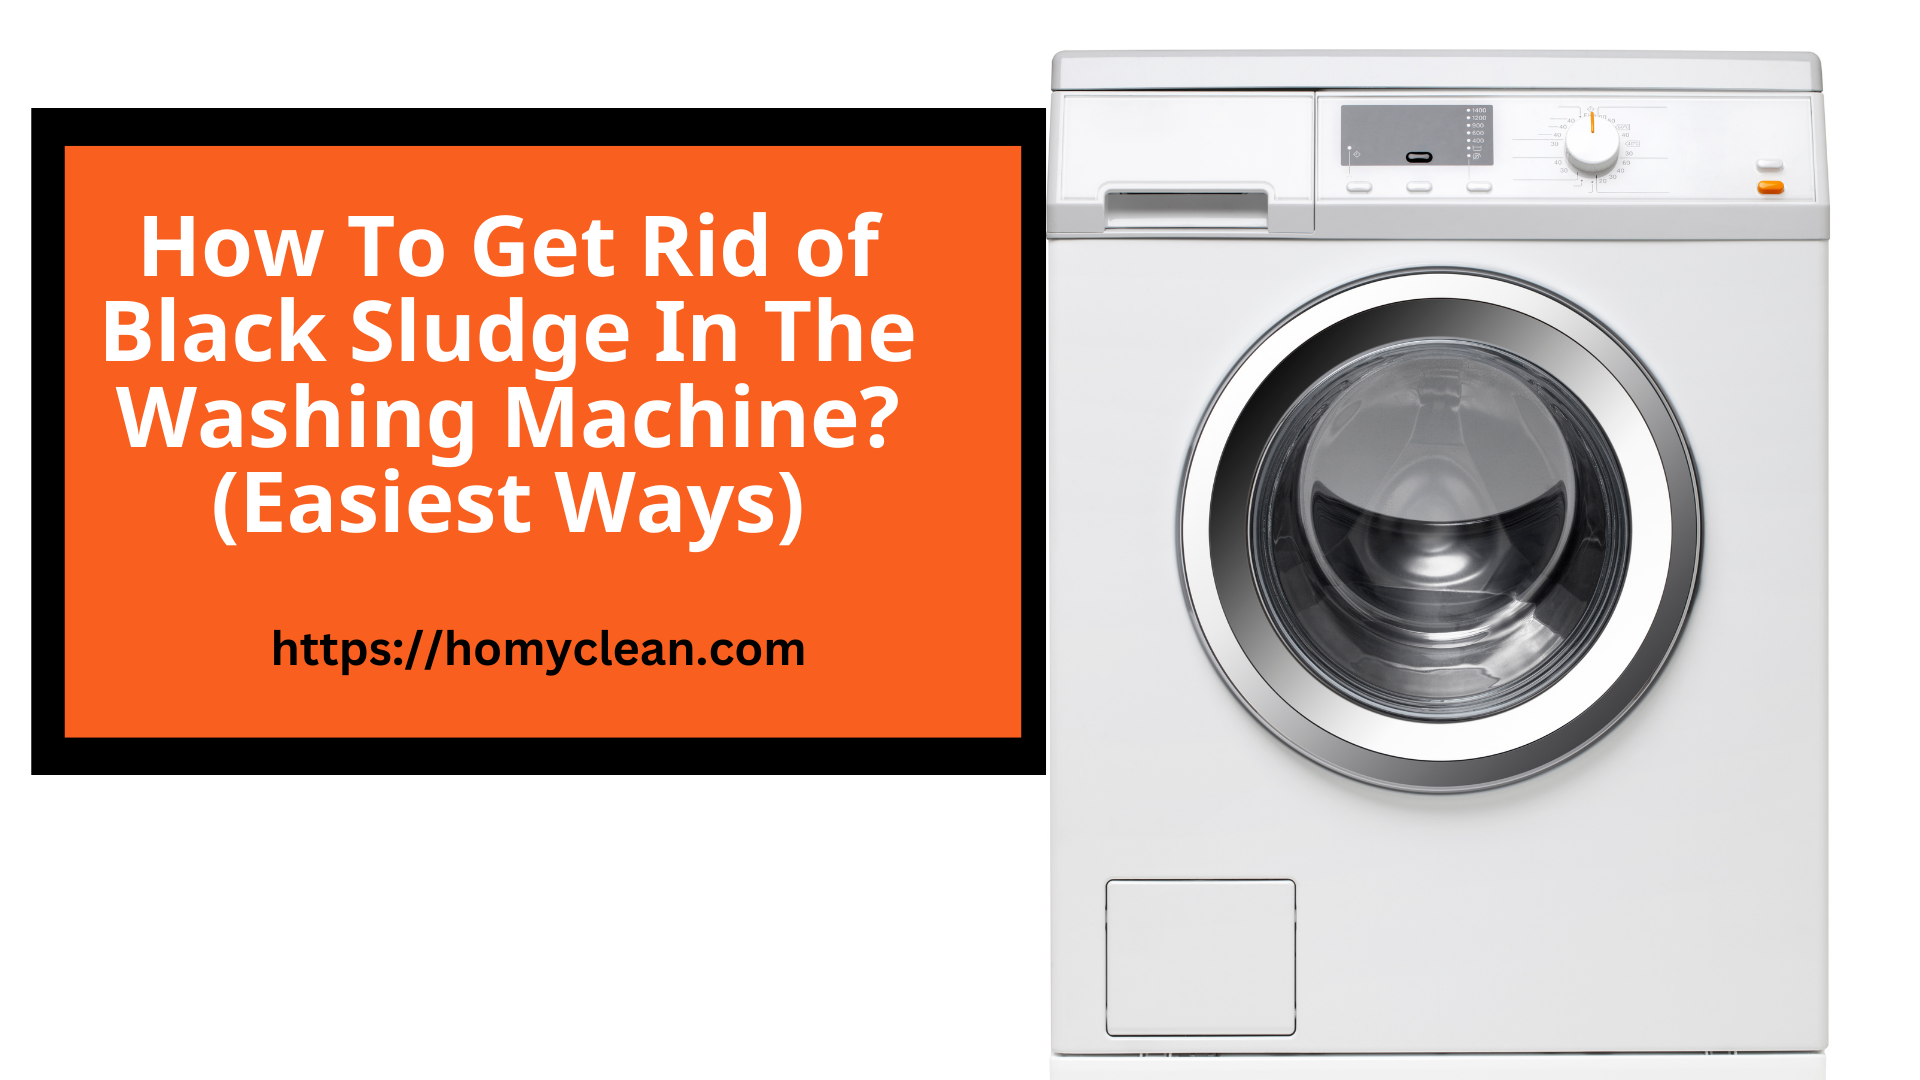 How To Get Rid of Black Sludge In Washing Machine? (Easiest Ways)